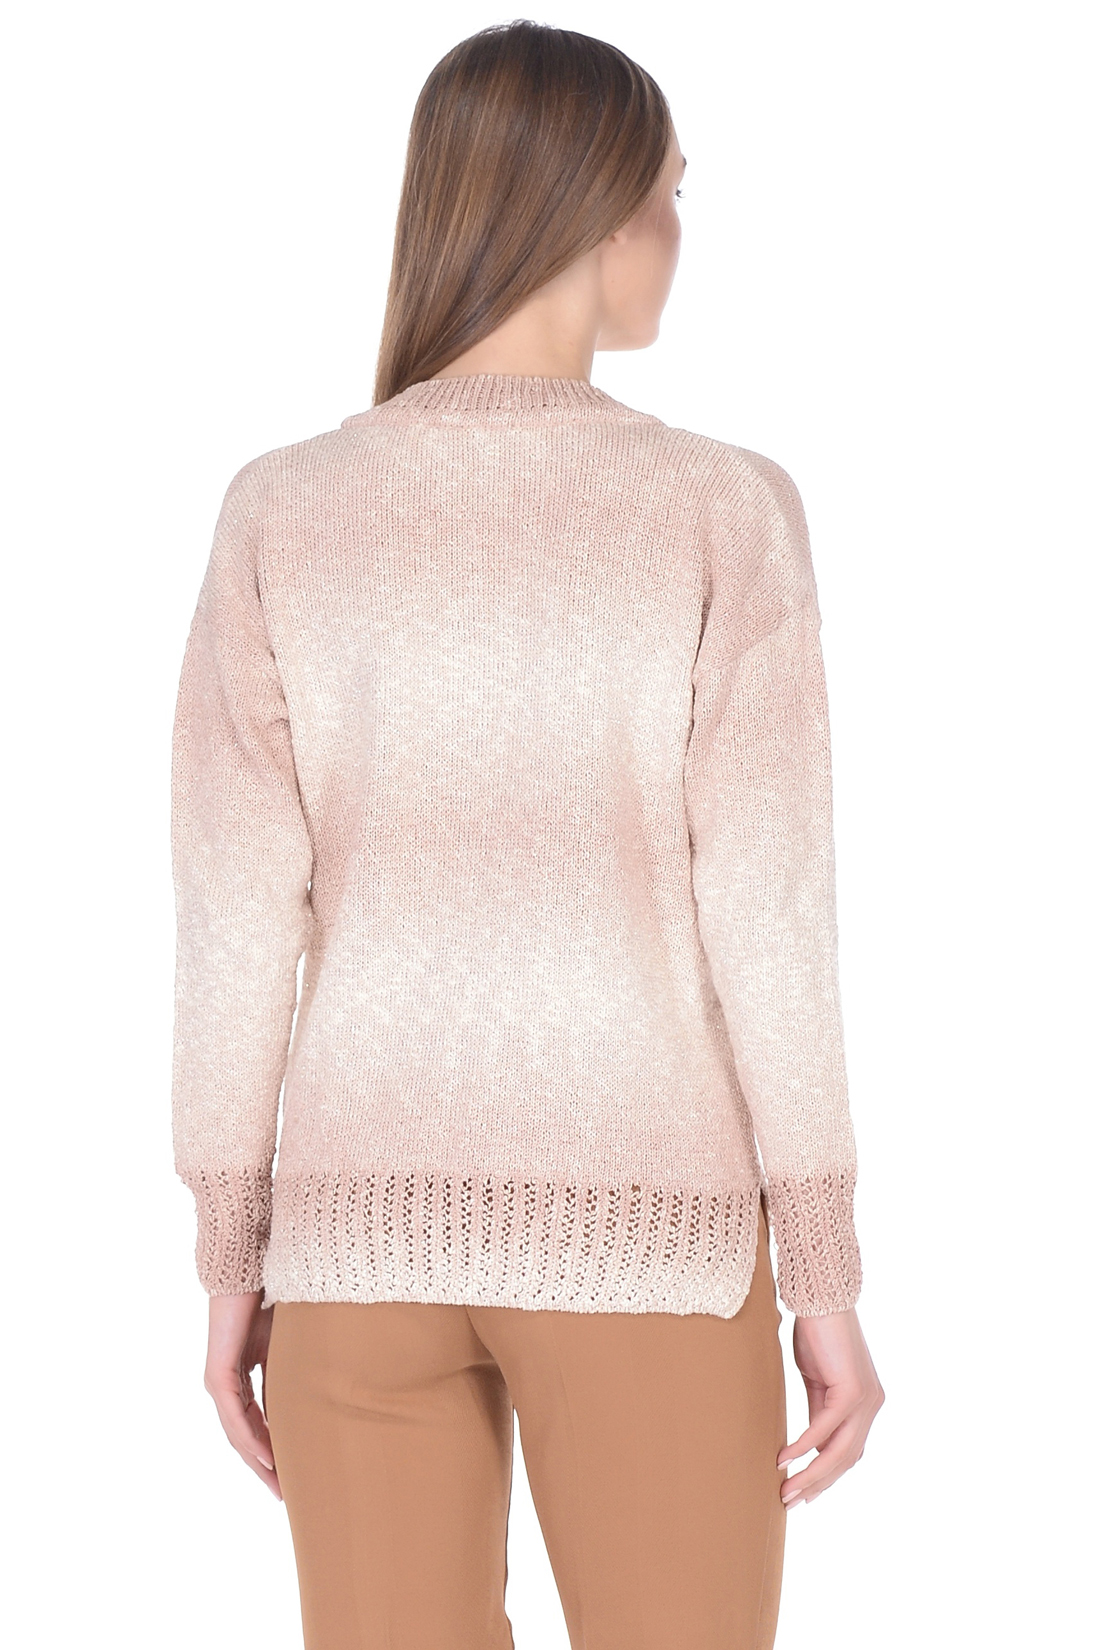 Пуловер с градиентом (арт. baon B138014), размер XXL, цвет розовый Пуловер с градиентом (арт. baon B138014) - фото 2